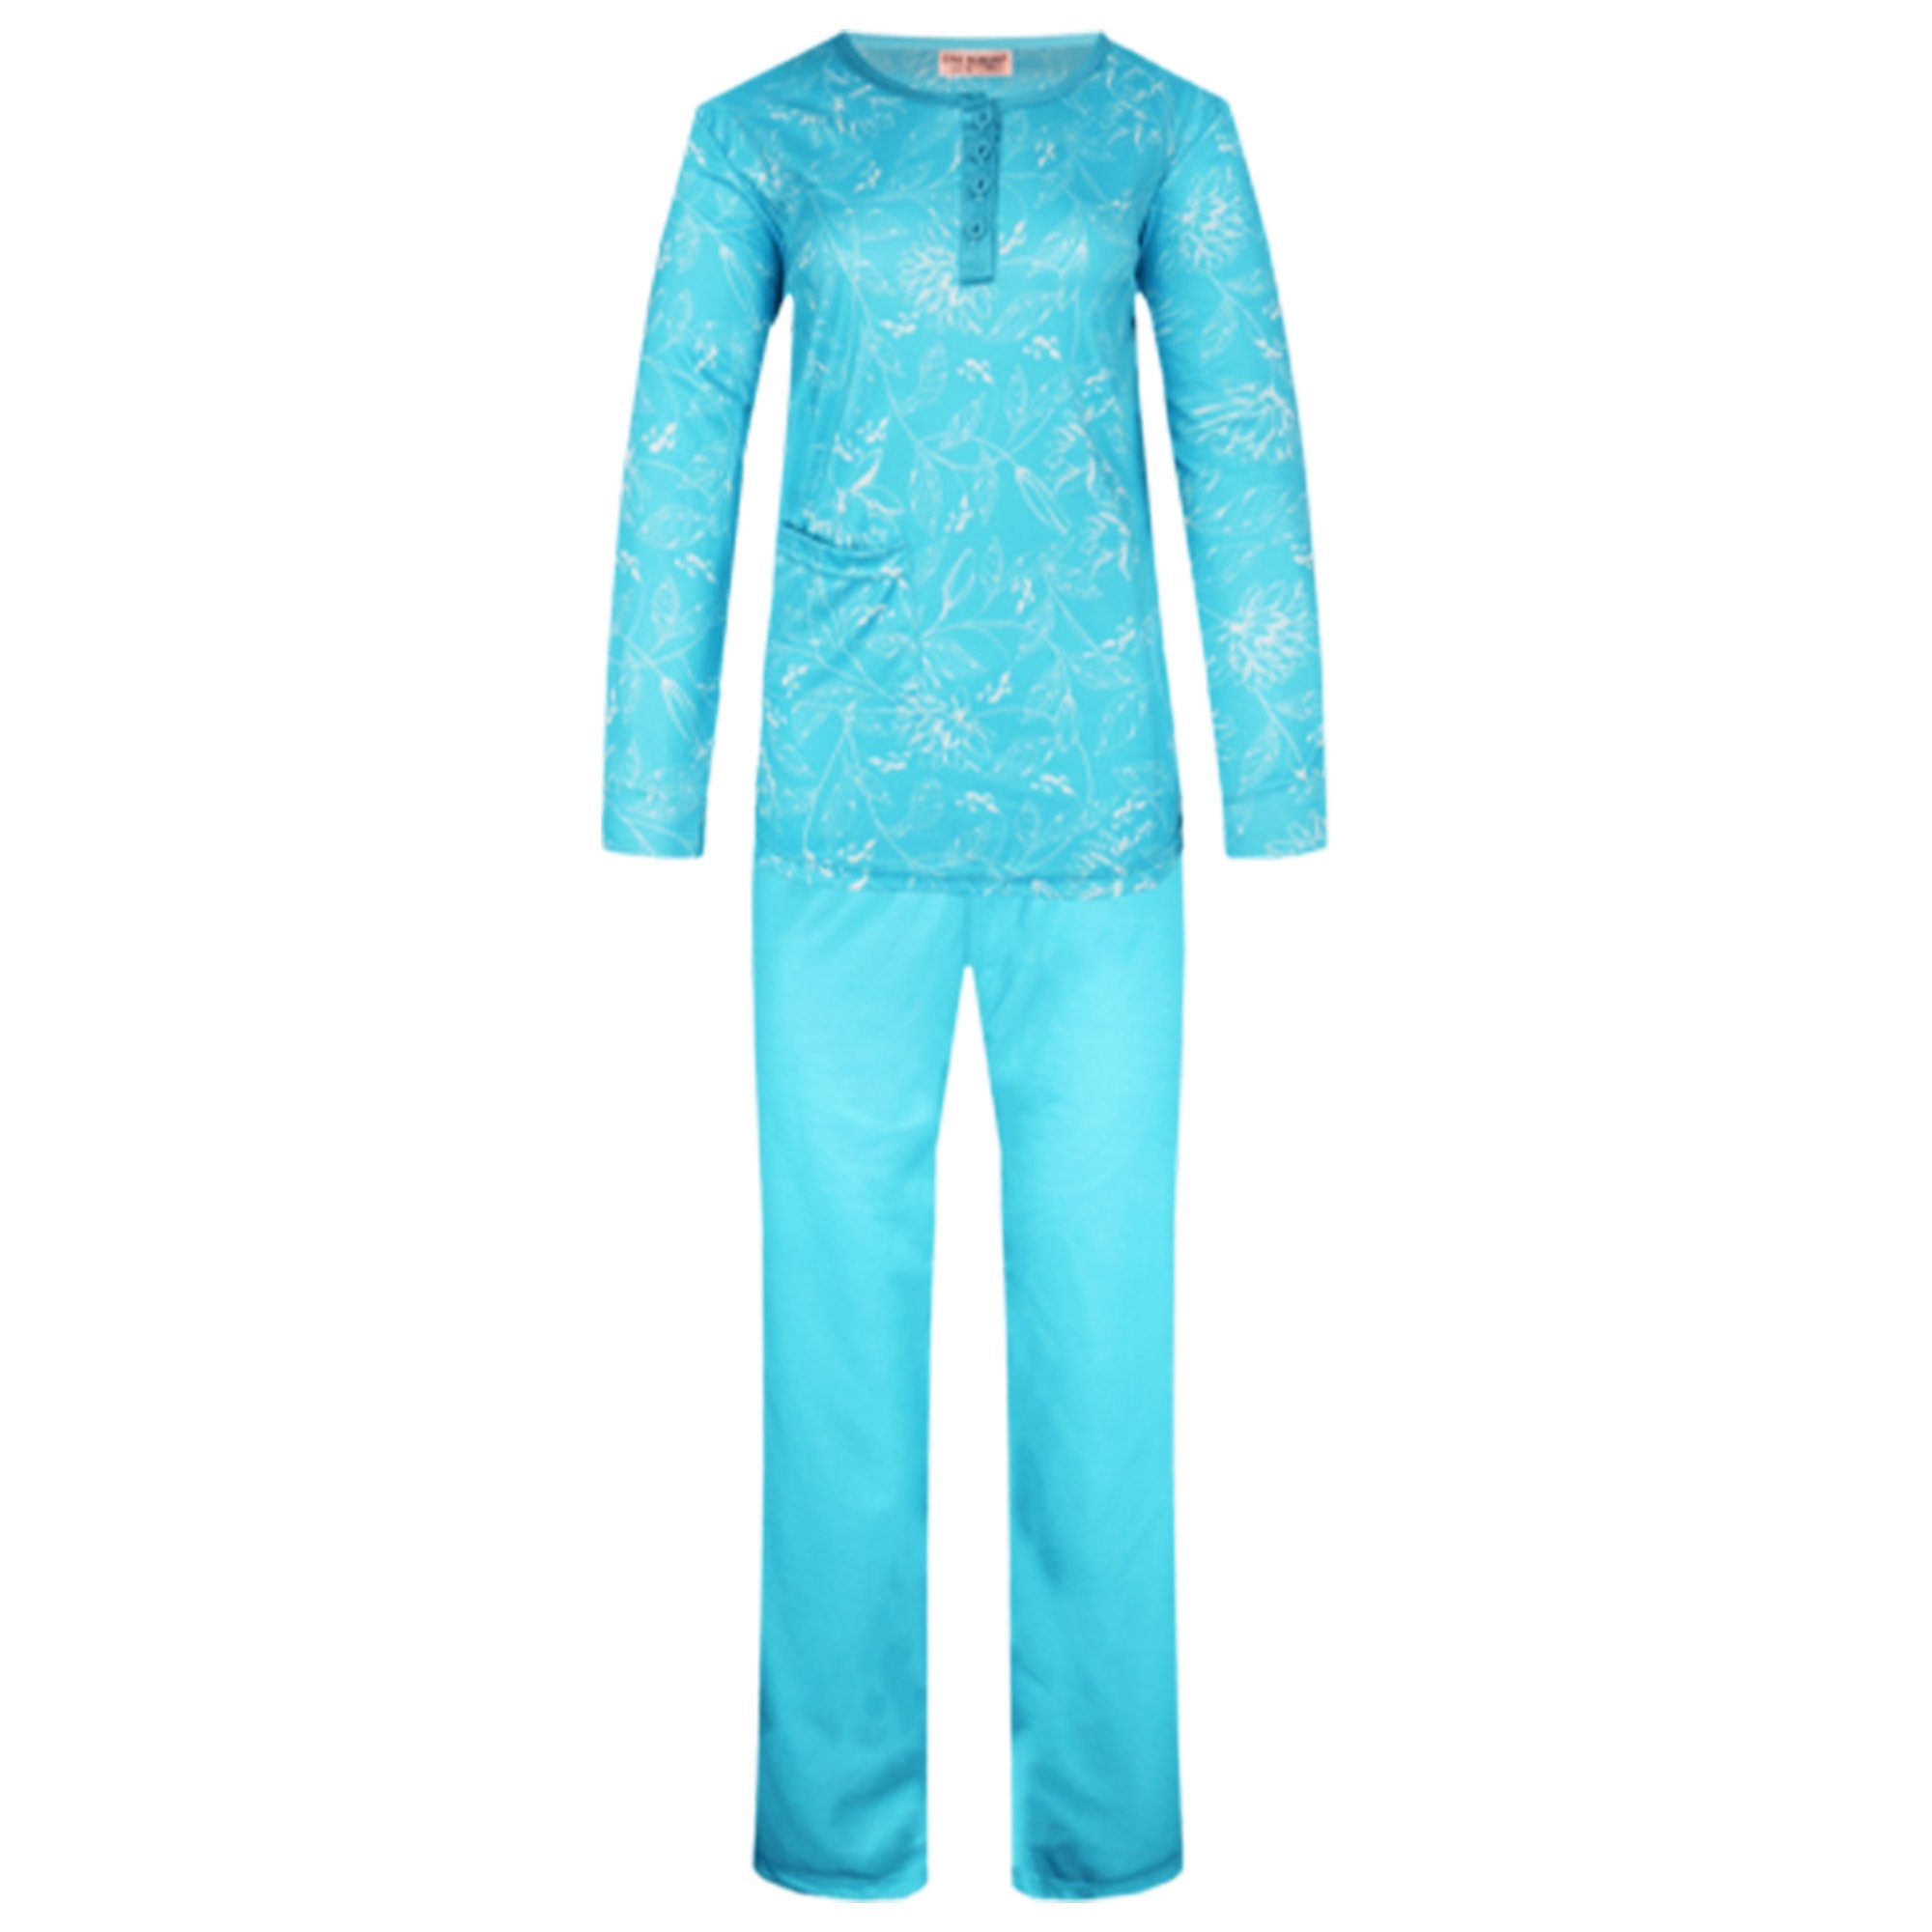 TEXEMP Pyjama Damen Pyjama Schlafanzug Set Baumwolle Langarm Nachtwäsche Lang (Set) 90% Baumwolle Türkis